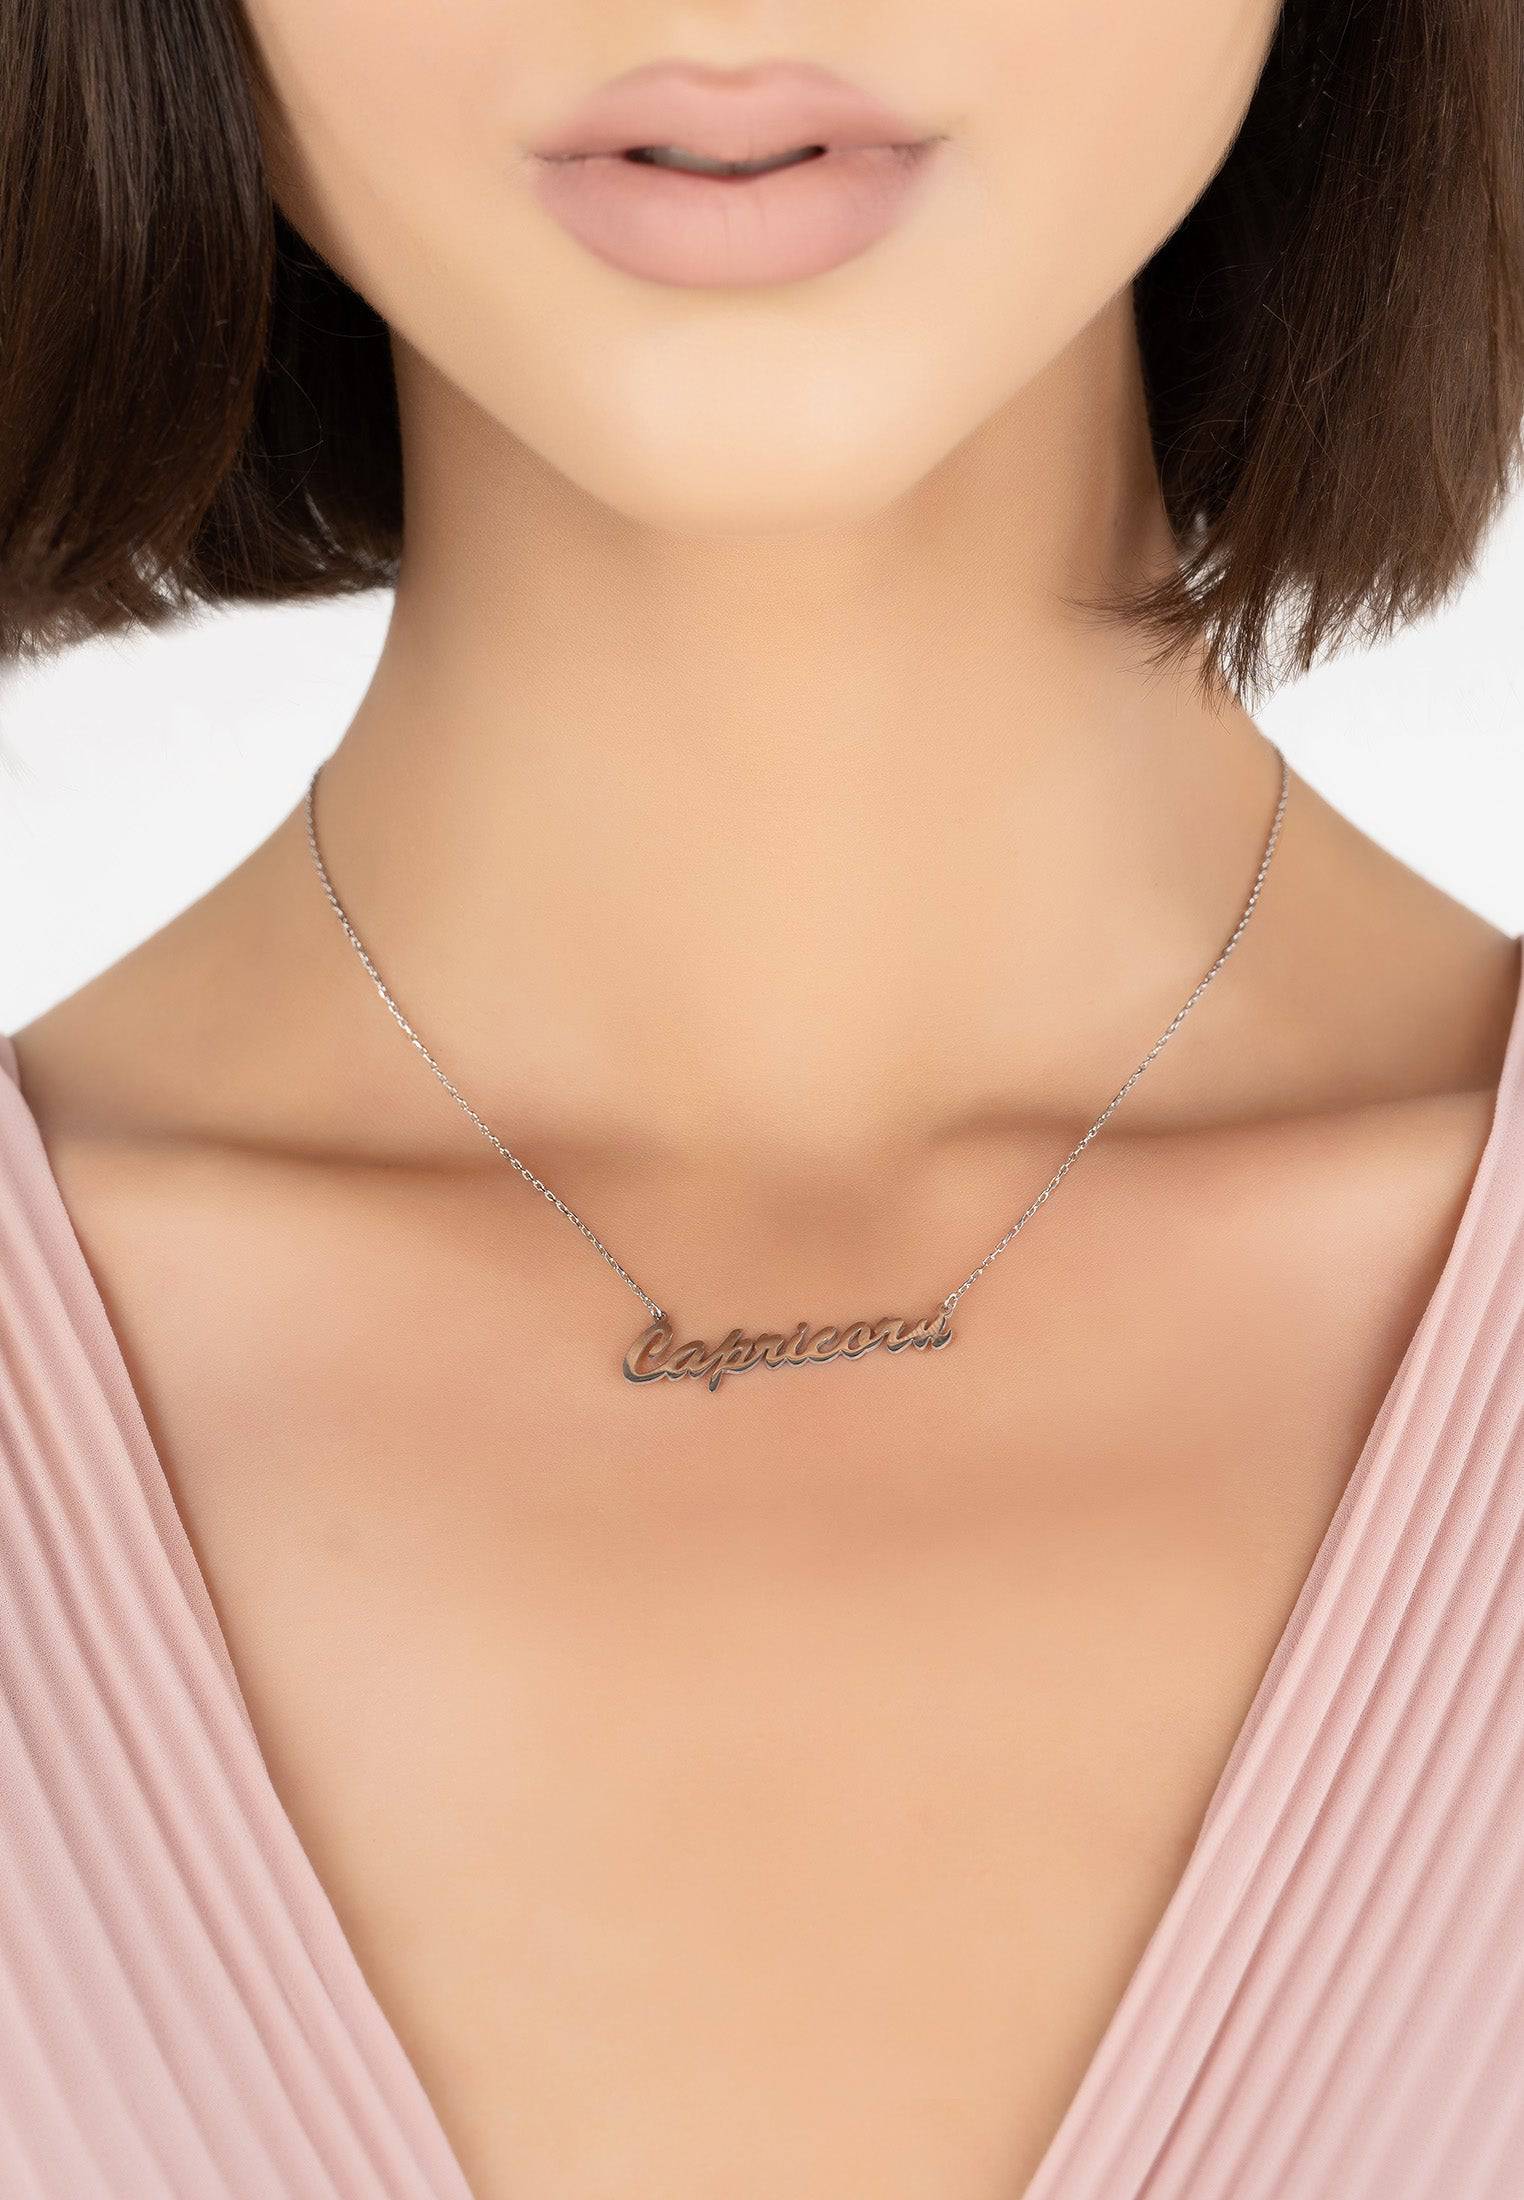 Capricorn Zodiac Name Necklace in Silver: Personalized Birthday Gift Idea Bijou Her